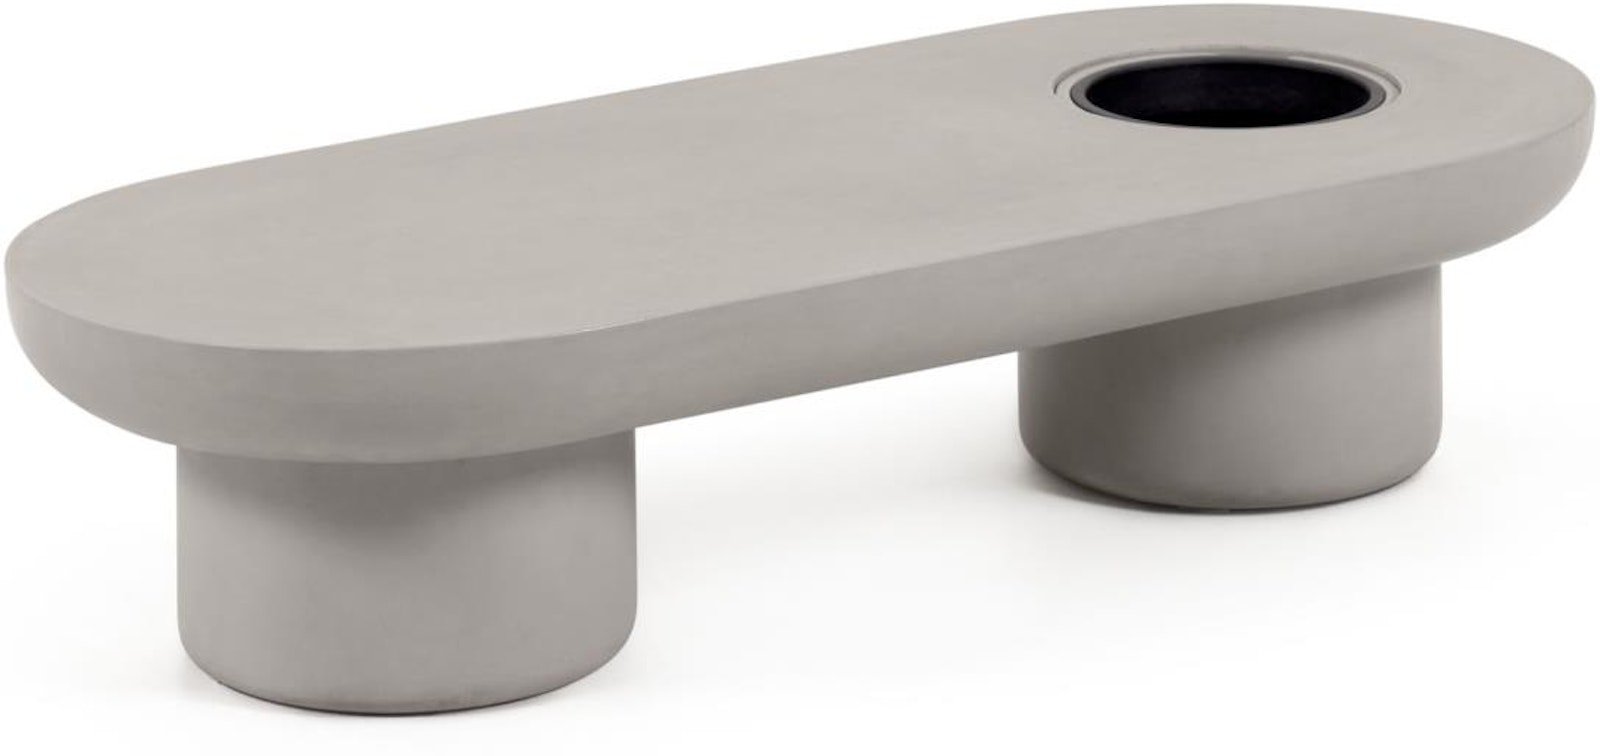 18: Taimi, Udendørs sofabord, moderne, nordisk, cement by Laforma (H: 30 cm. x B: 60 cm. x L: 140 cm., Natur)